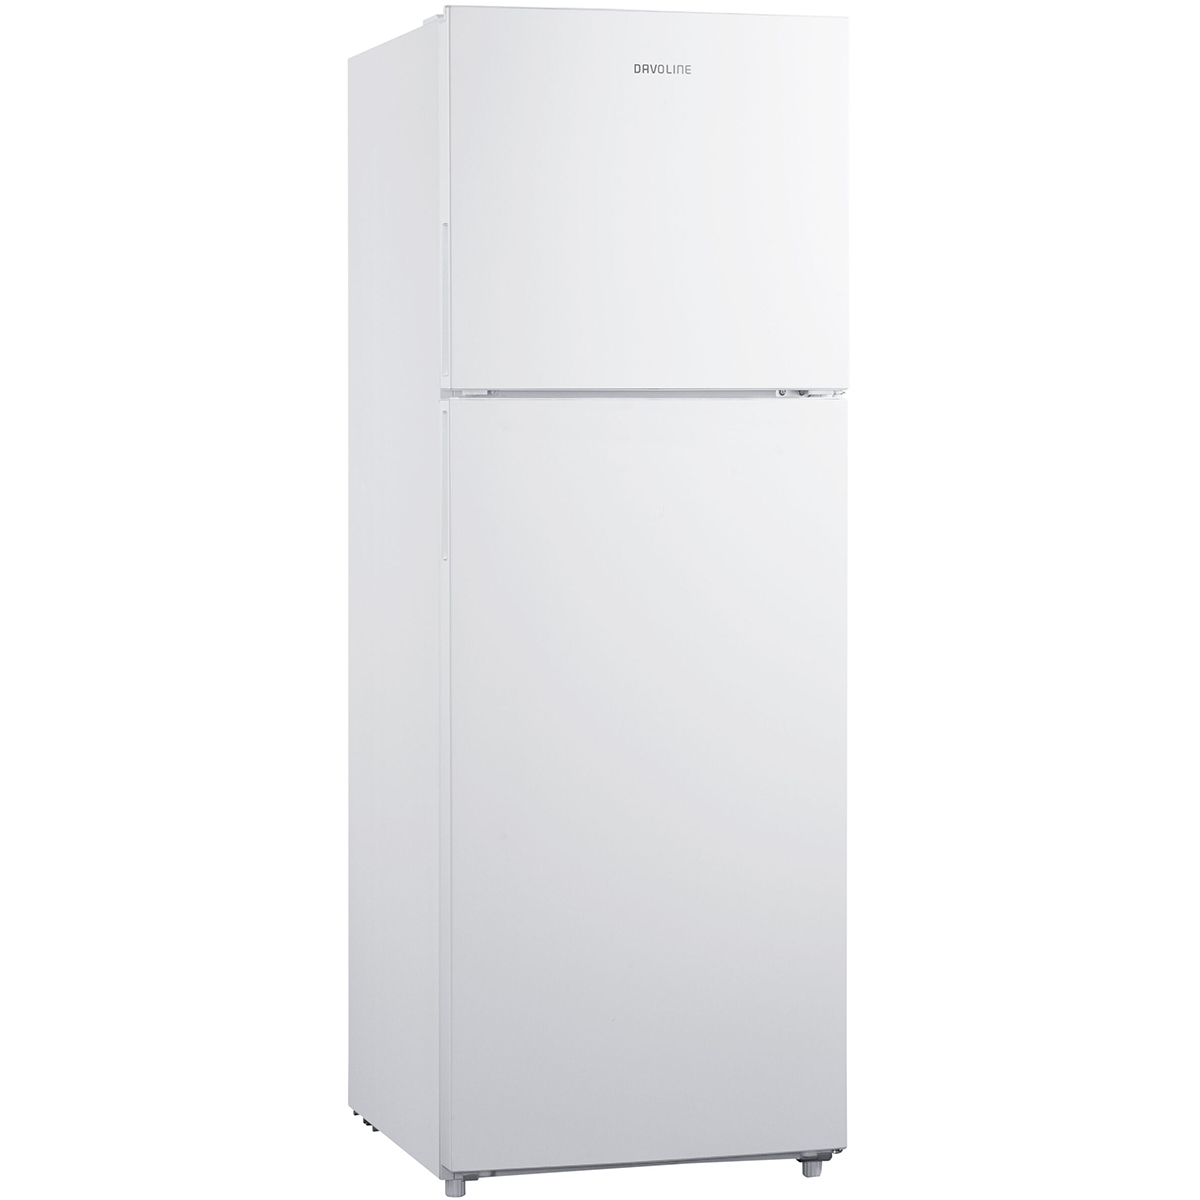 Davoline FTM 170 E IX Ψυγείο Δίπορτο Total No Frost Λευκές Συσκευές 170 29